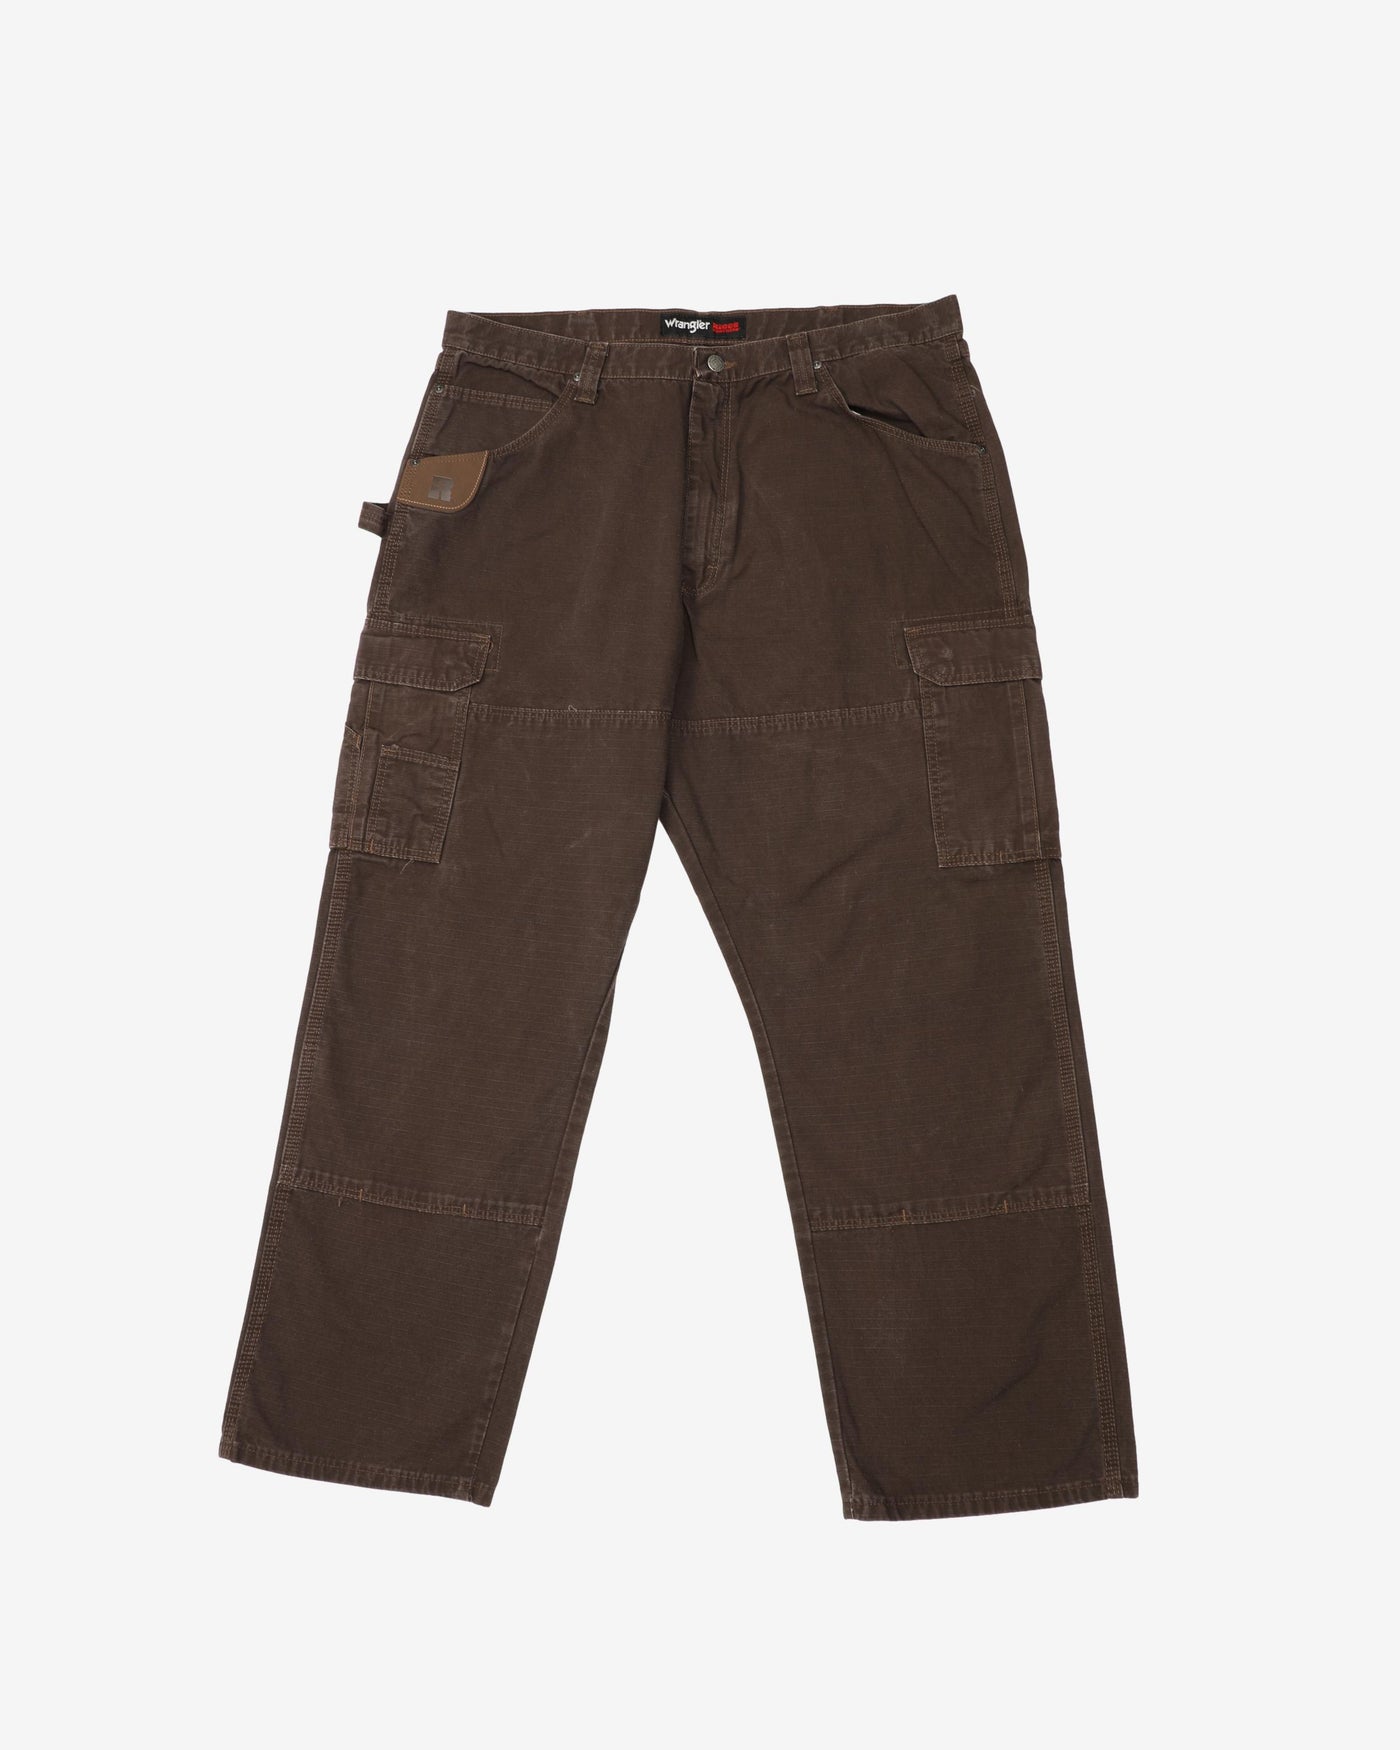 Wrangler Riggs Workwear Brown Double Knee Denim Work Pant / Jeans - W39 L30